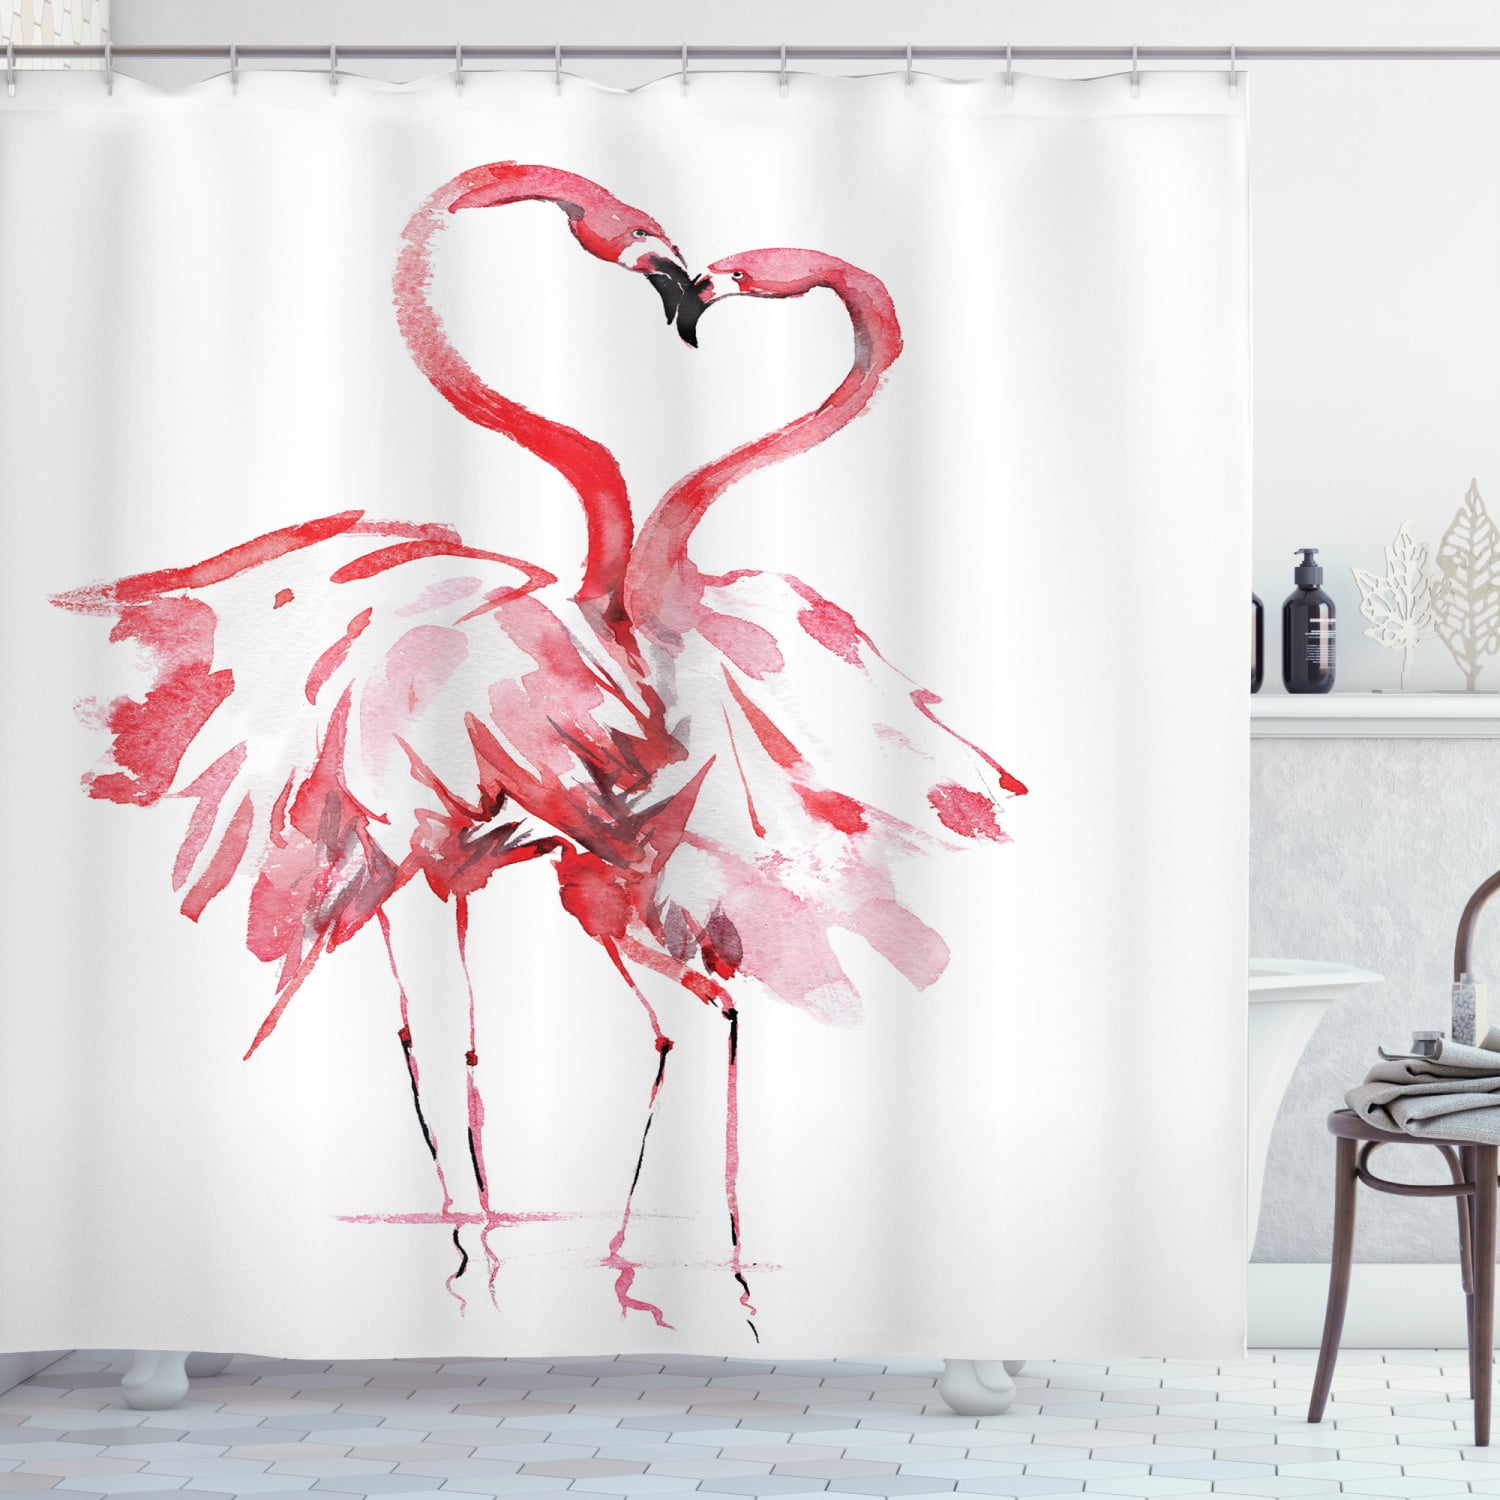 Unicorn Shower Curtain Bathroom Decor Fabric & 12hooks Cartoon Symbol Flamingo